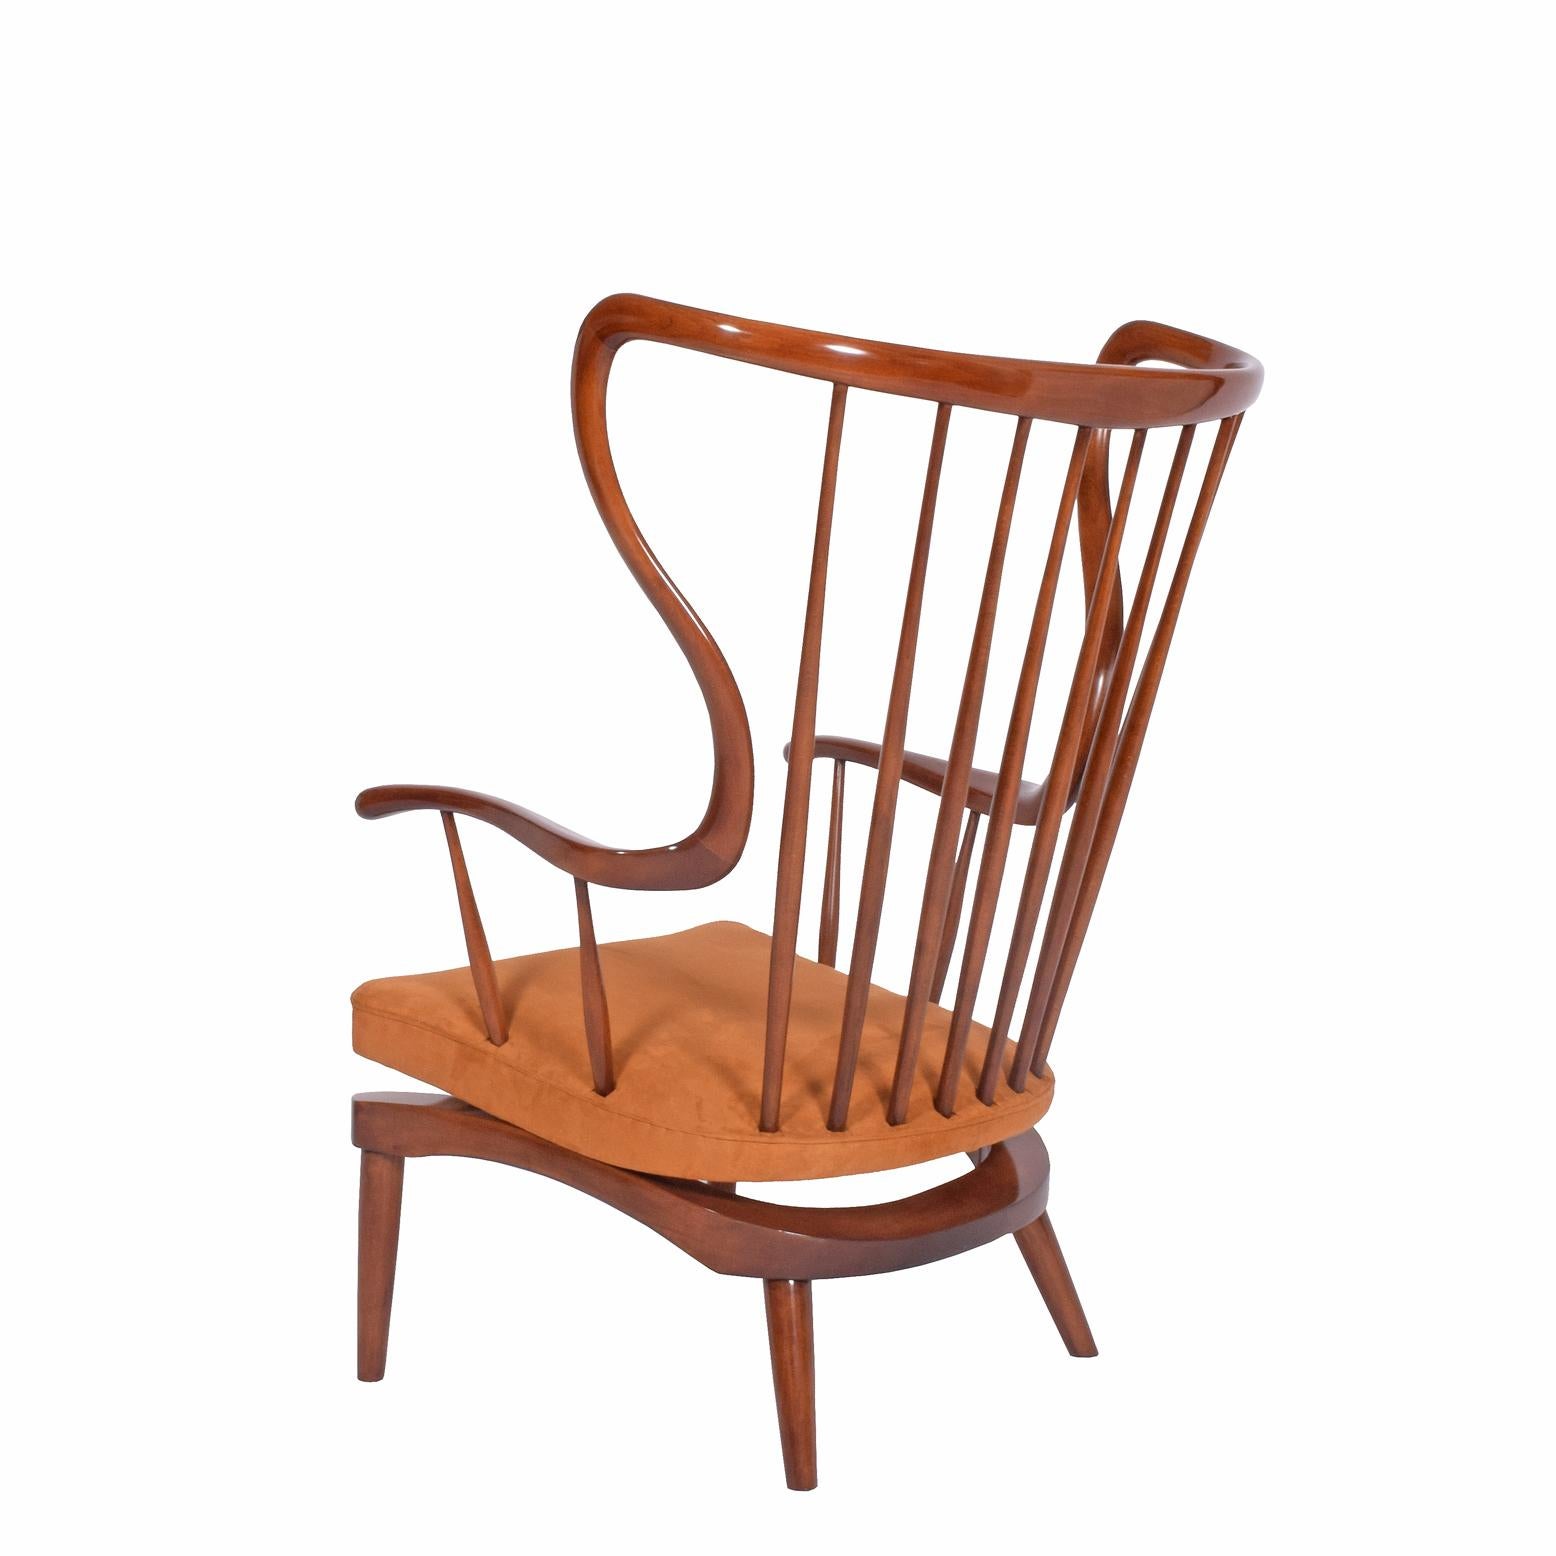 Mid-20th Century Danish Architect Designed Sculptural Rocking Chair